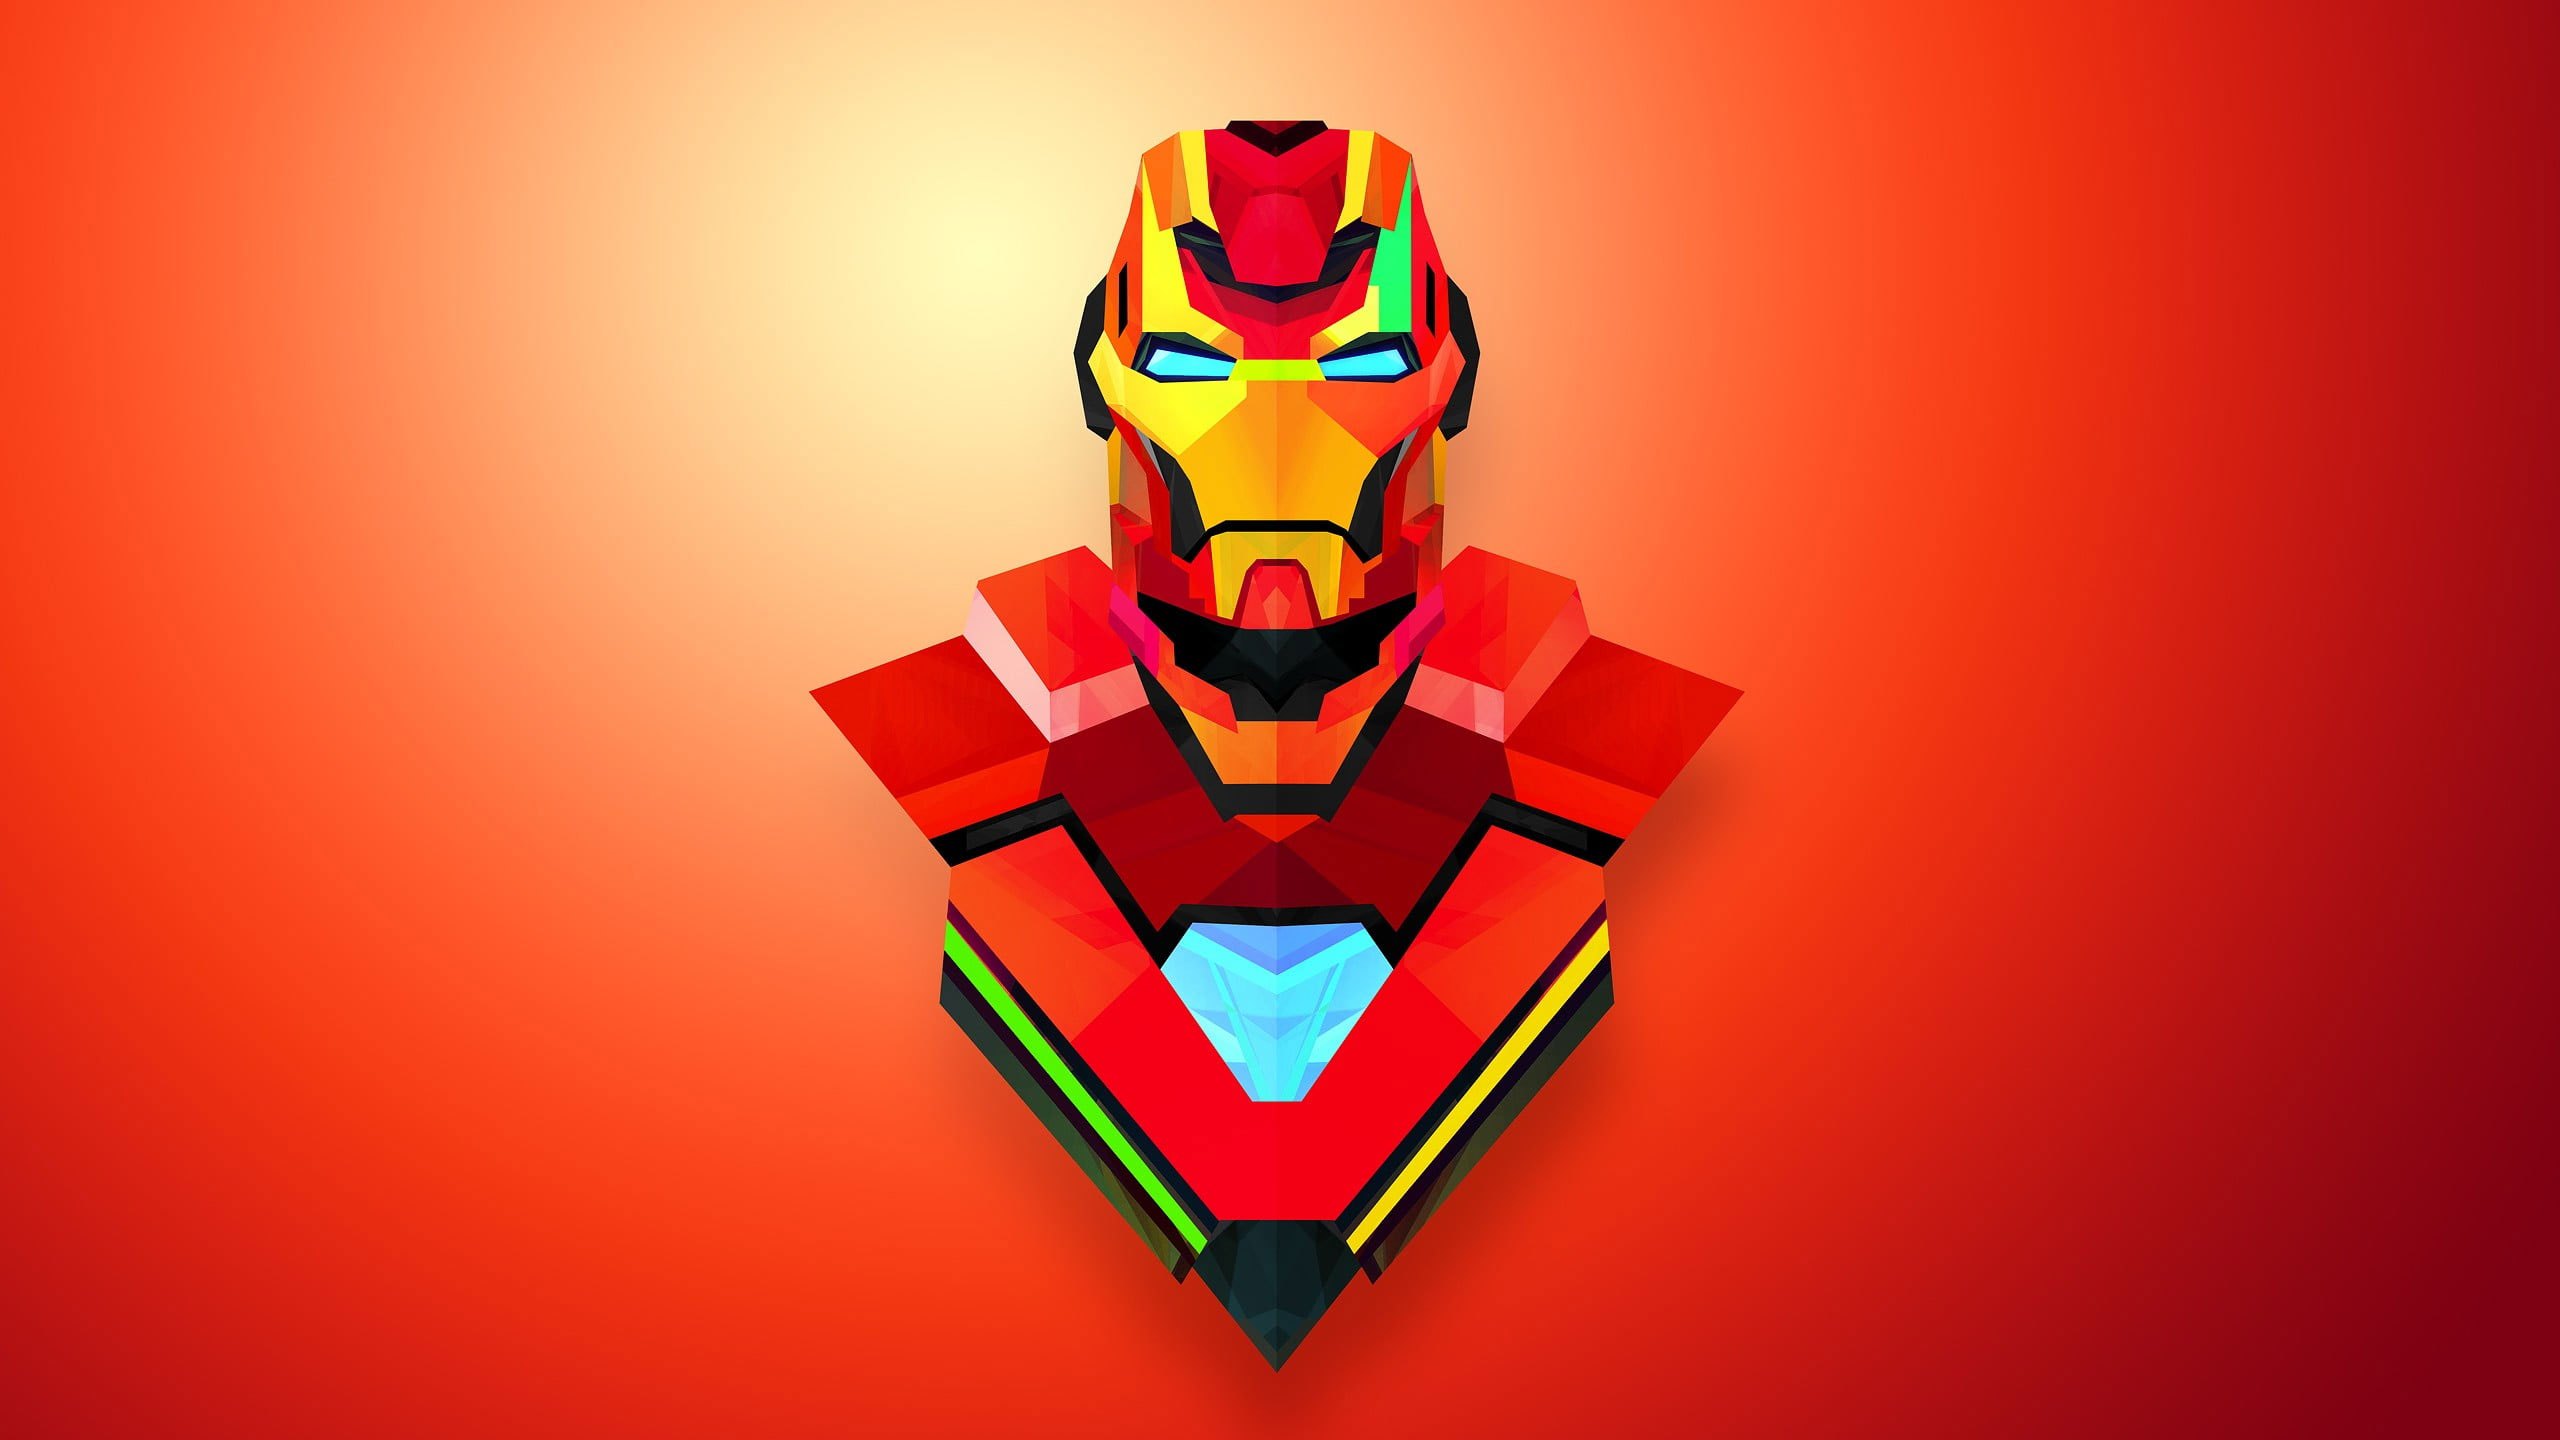 Iron Man illustration wallpaper, abstract • Wallpaper For You HD Wallpaper For Desktop & Mobile